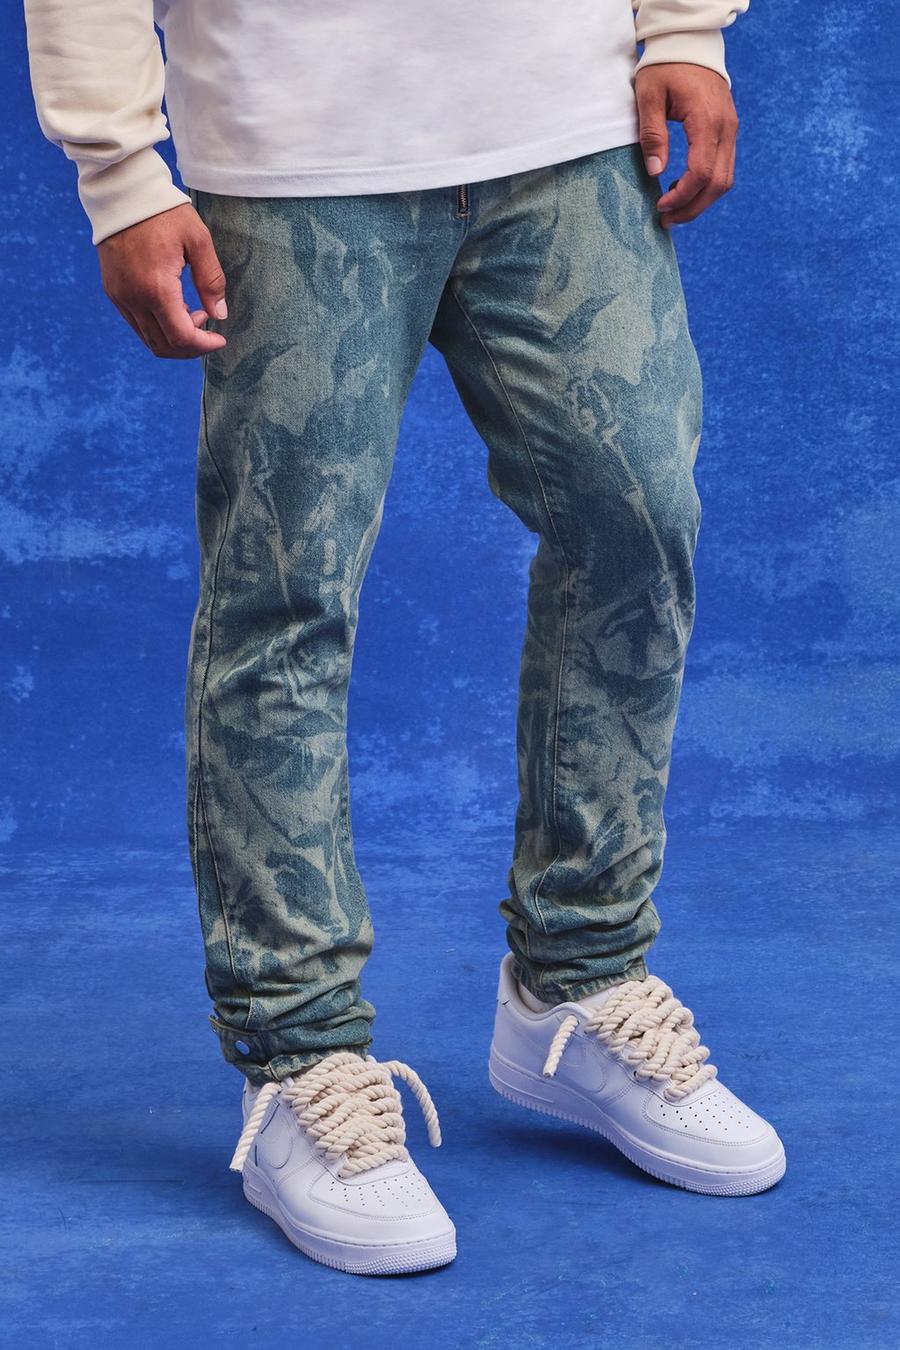 Jeans Slim Fit in denim rigido con stampa rinascimentale al laser, Antique blue